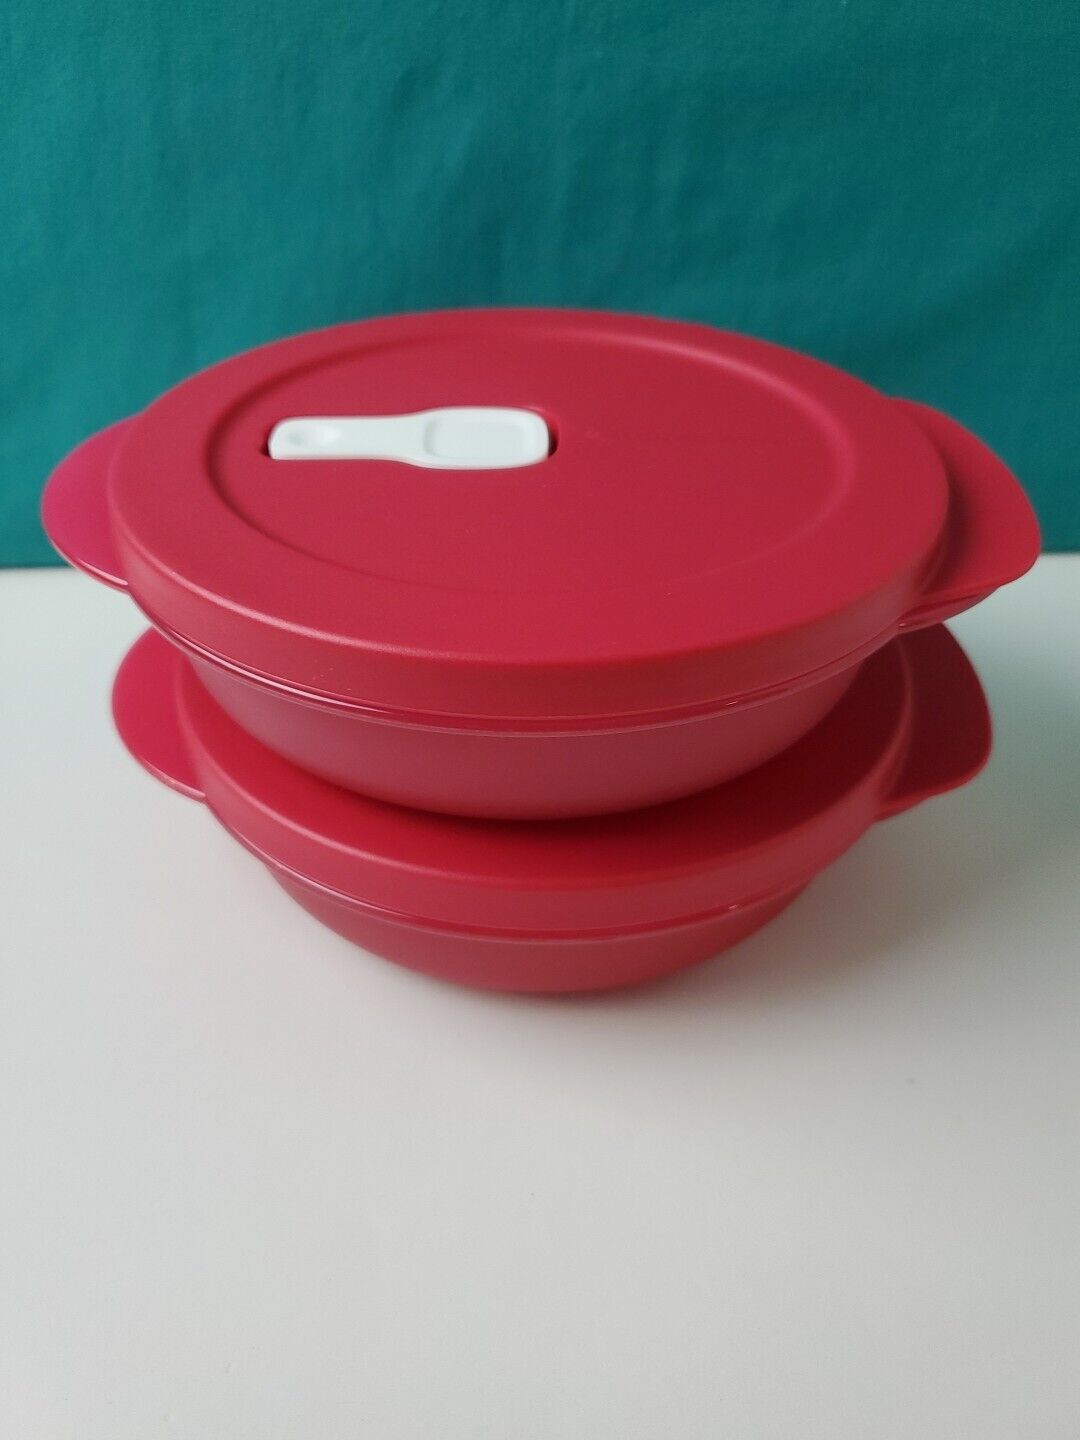 Tupperware CrystalWave Microwave PLUS 1.5 Cup 390 ml Round Bowl Red Set Of 2